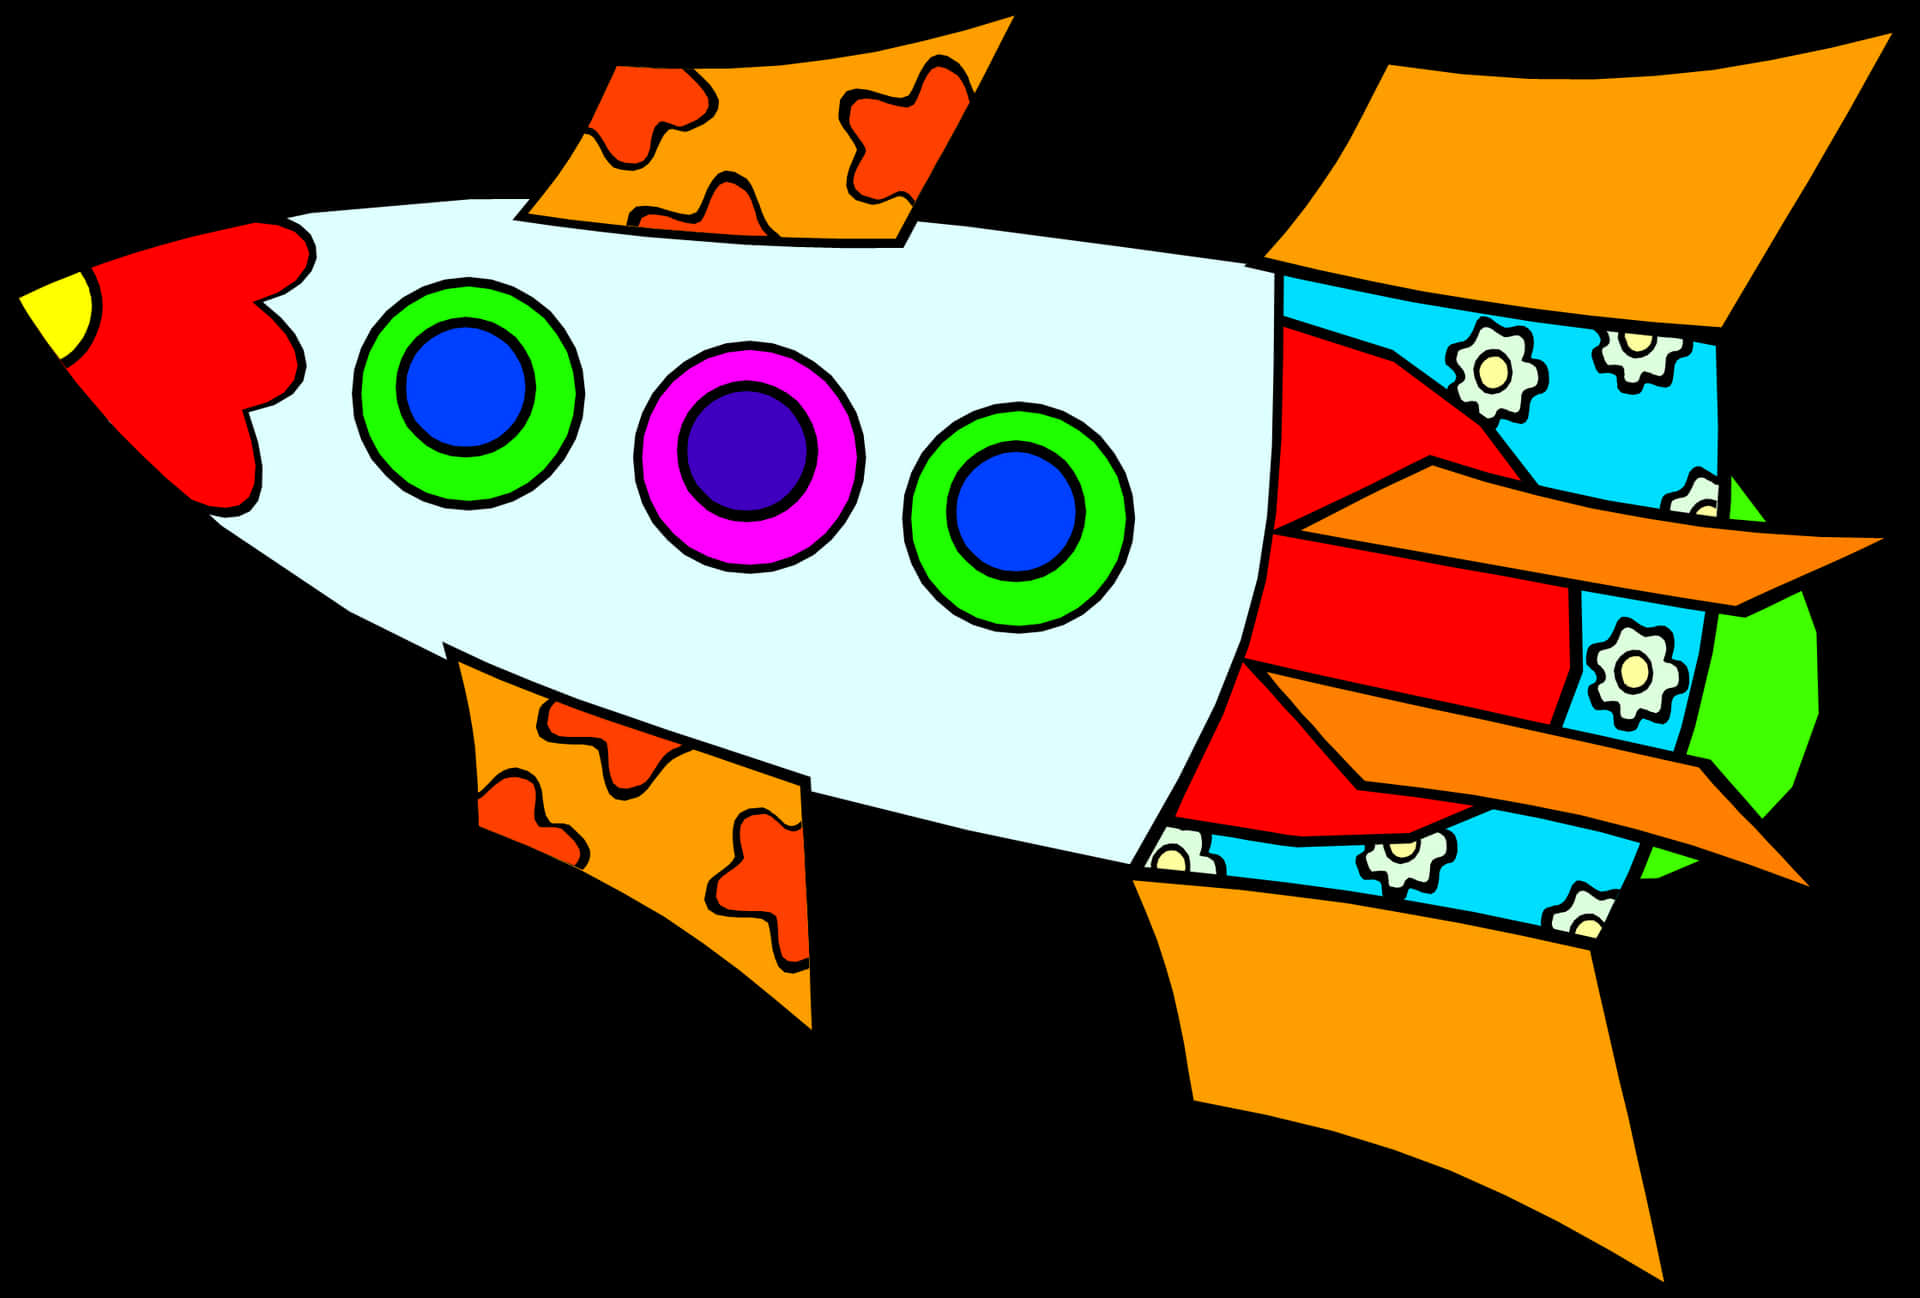 Colorful Cartoon Rocket Illustration PNG